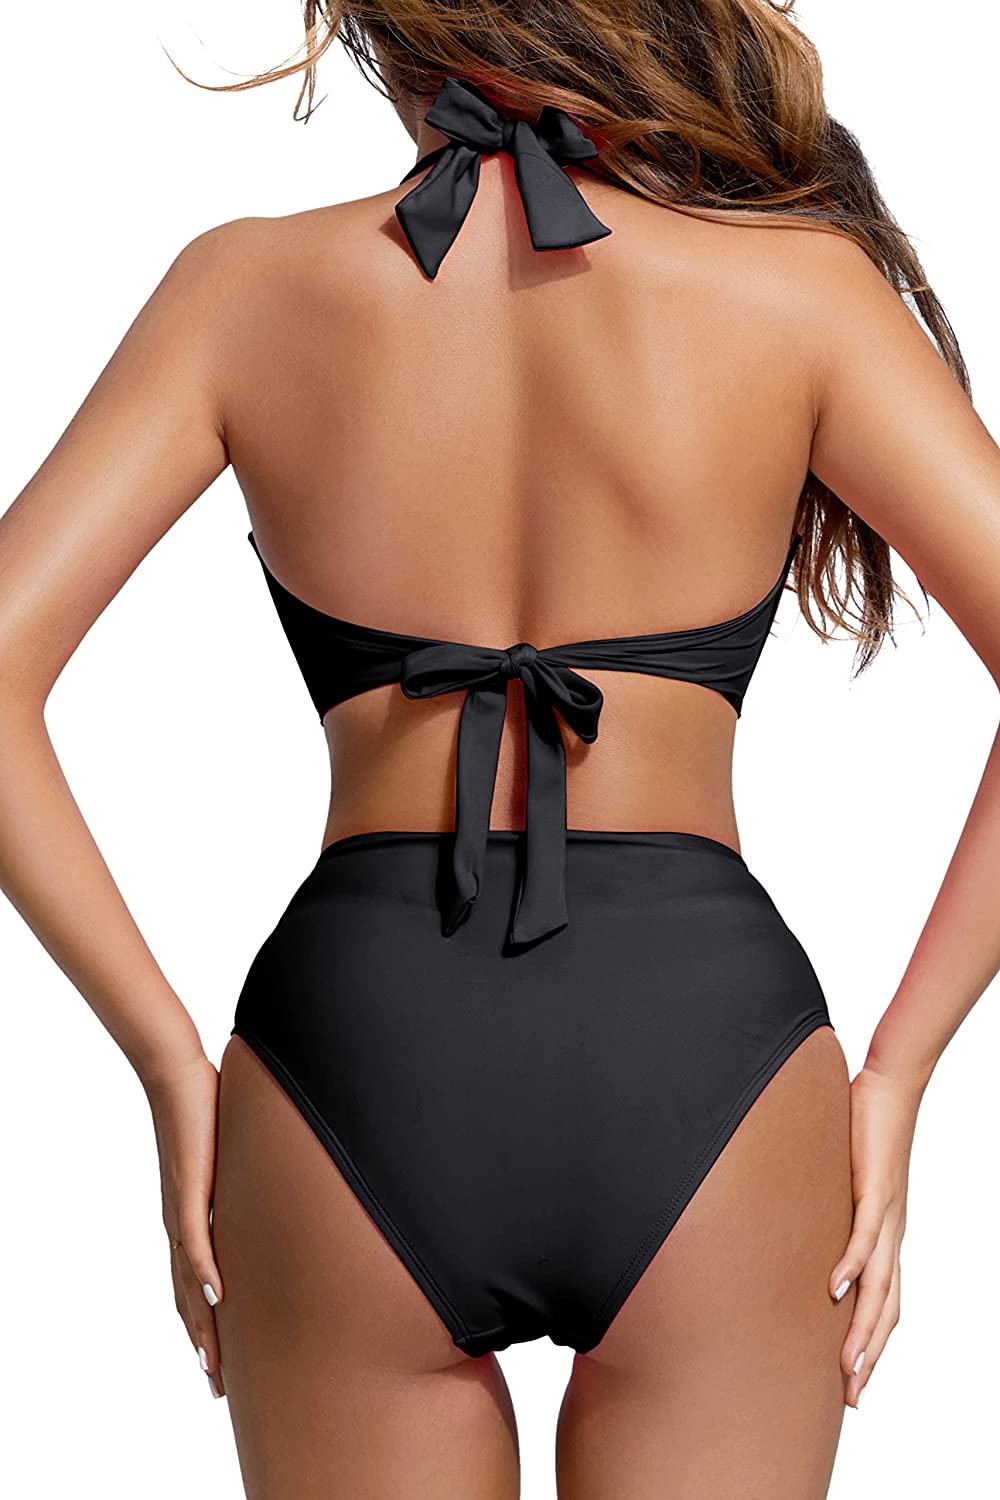 Beautikini Women's Bikini Swimsuits Two Piece Bathing Suits Halter Push Up Bikini High Waisted Full Coverage Bottoms